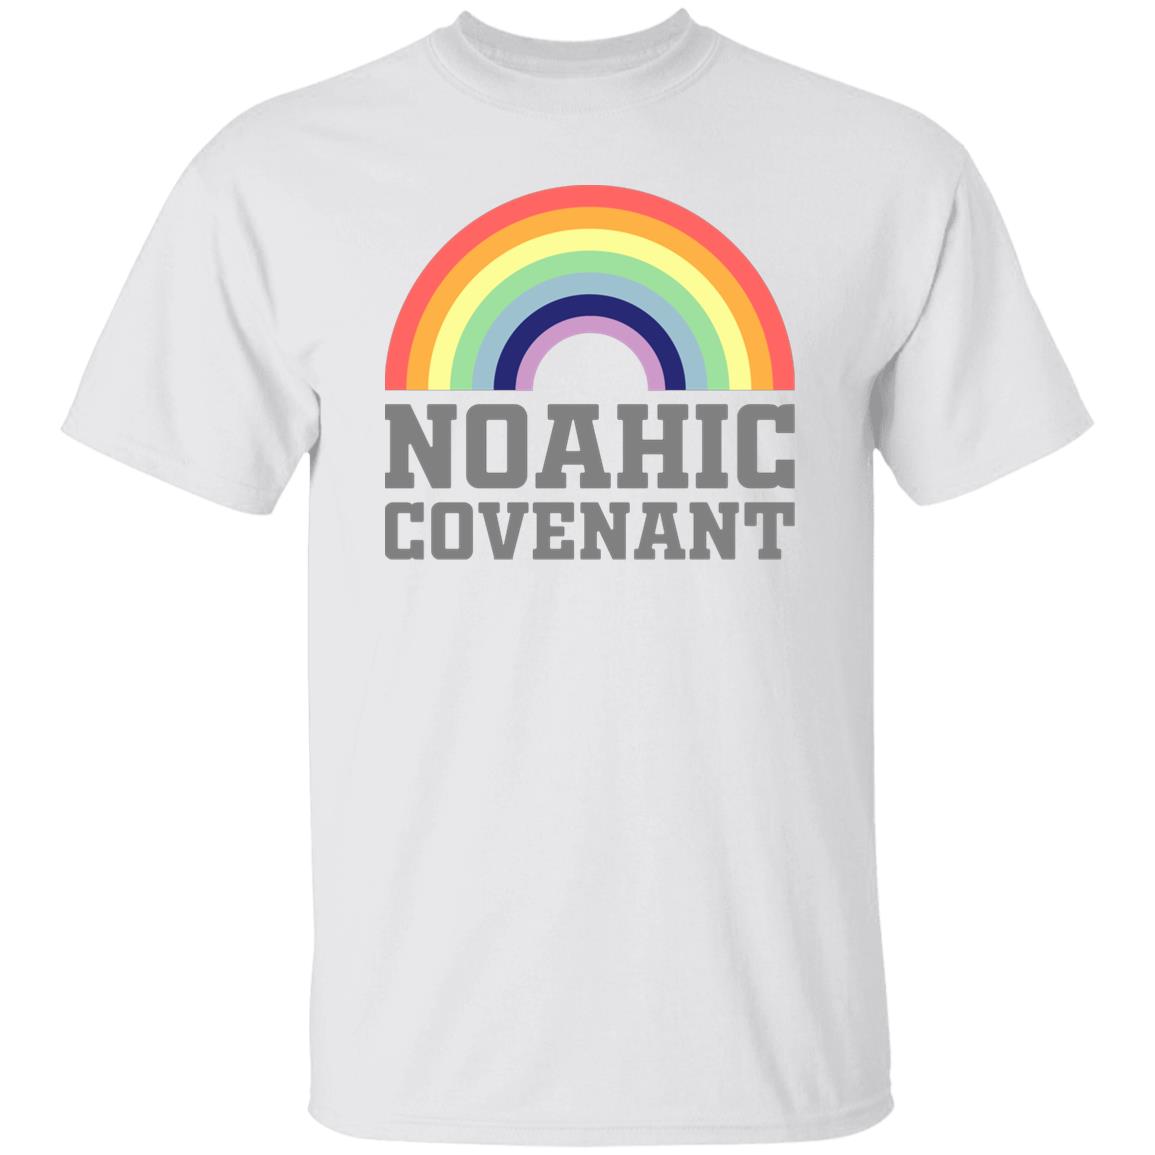 Noahic Covenant (Unisex Tee)